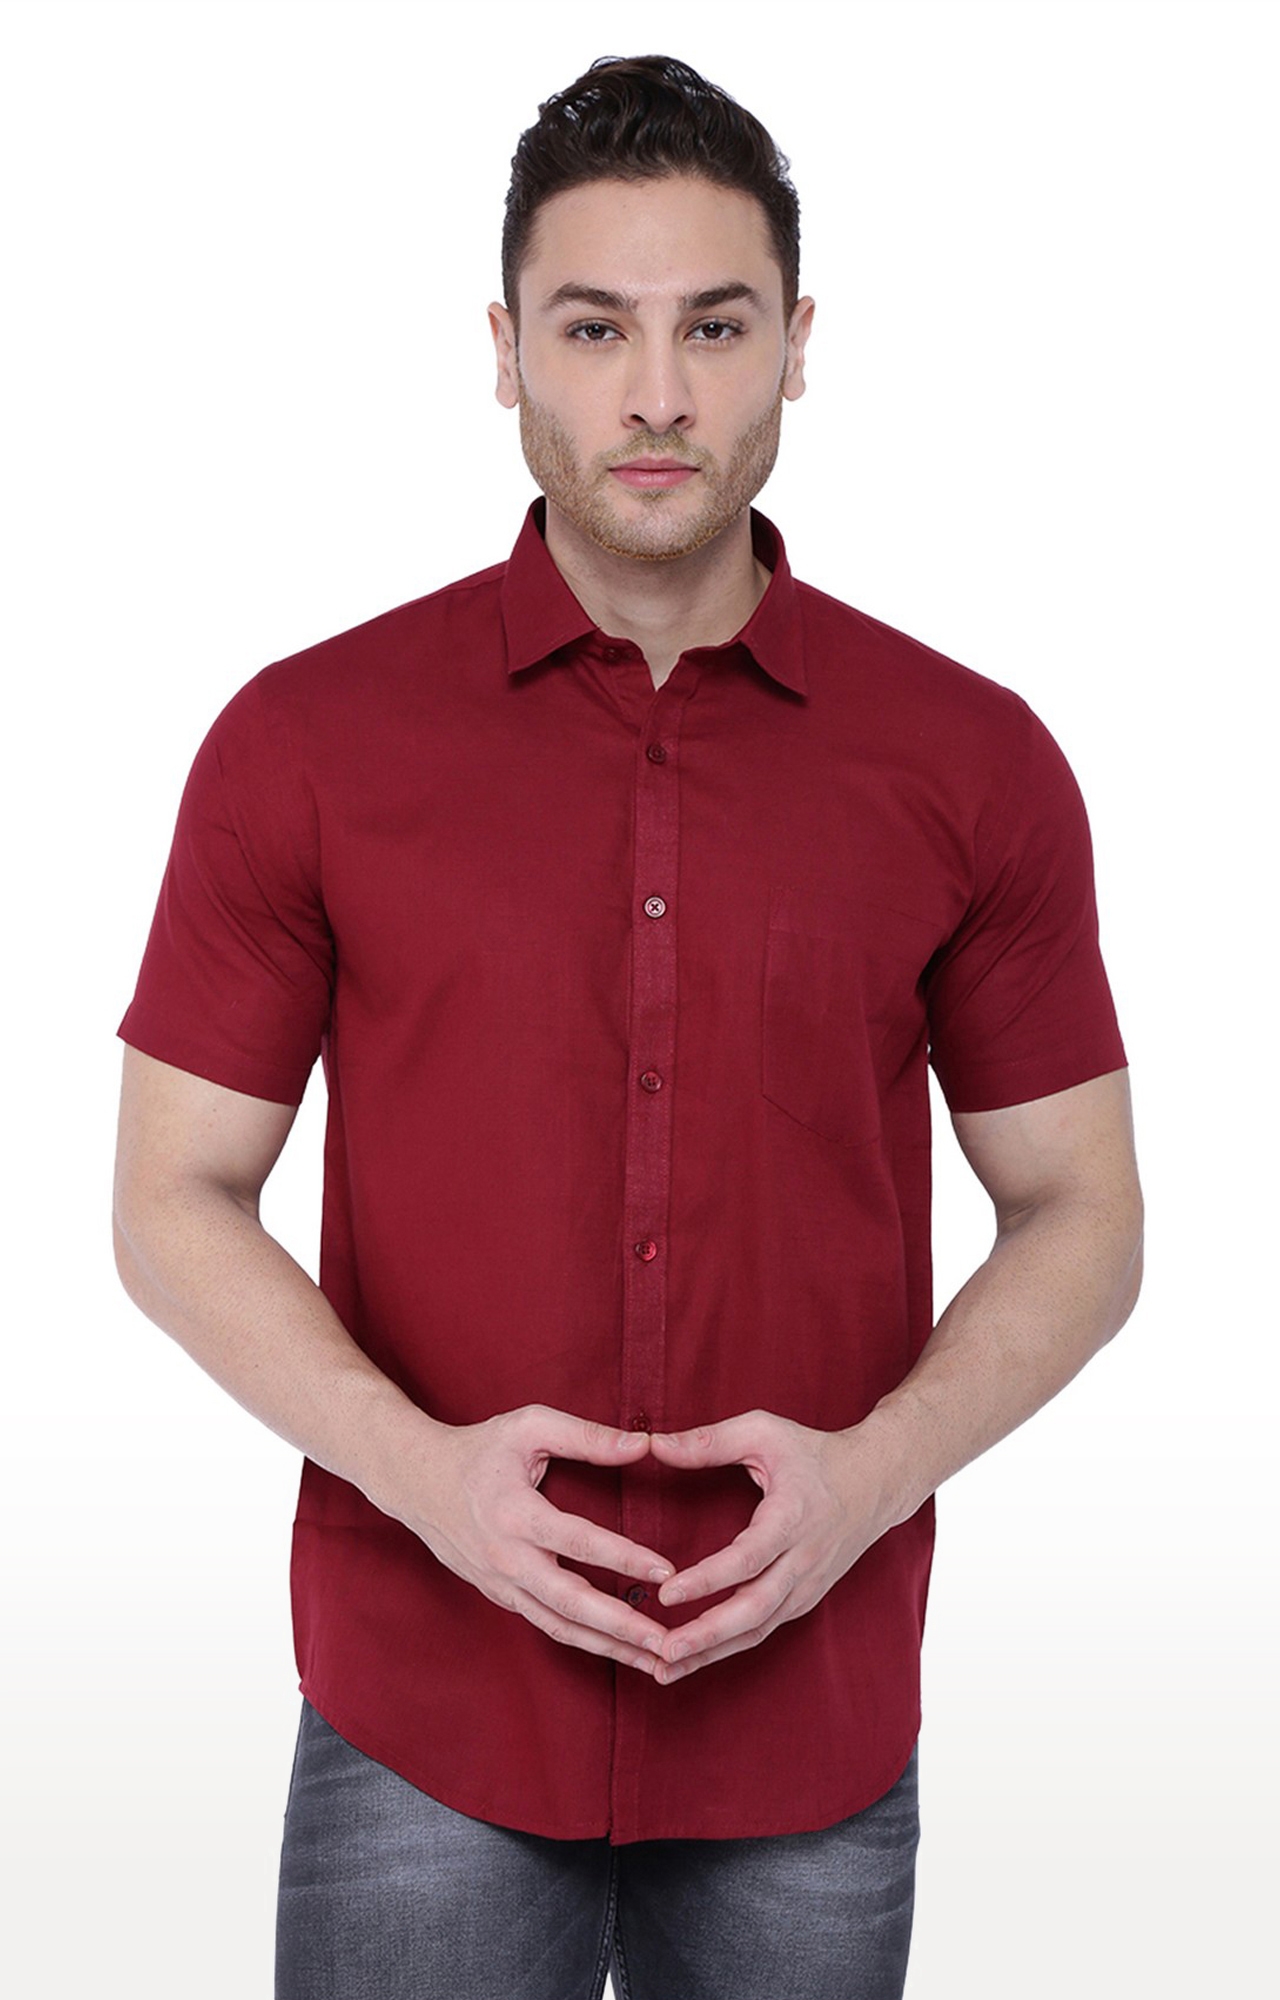 Southbay Men's Maroon Half Sleeve Linen Cotton Formal Shirt